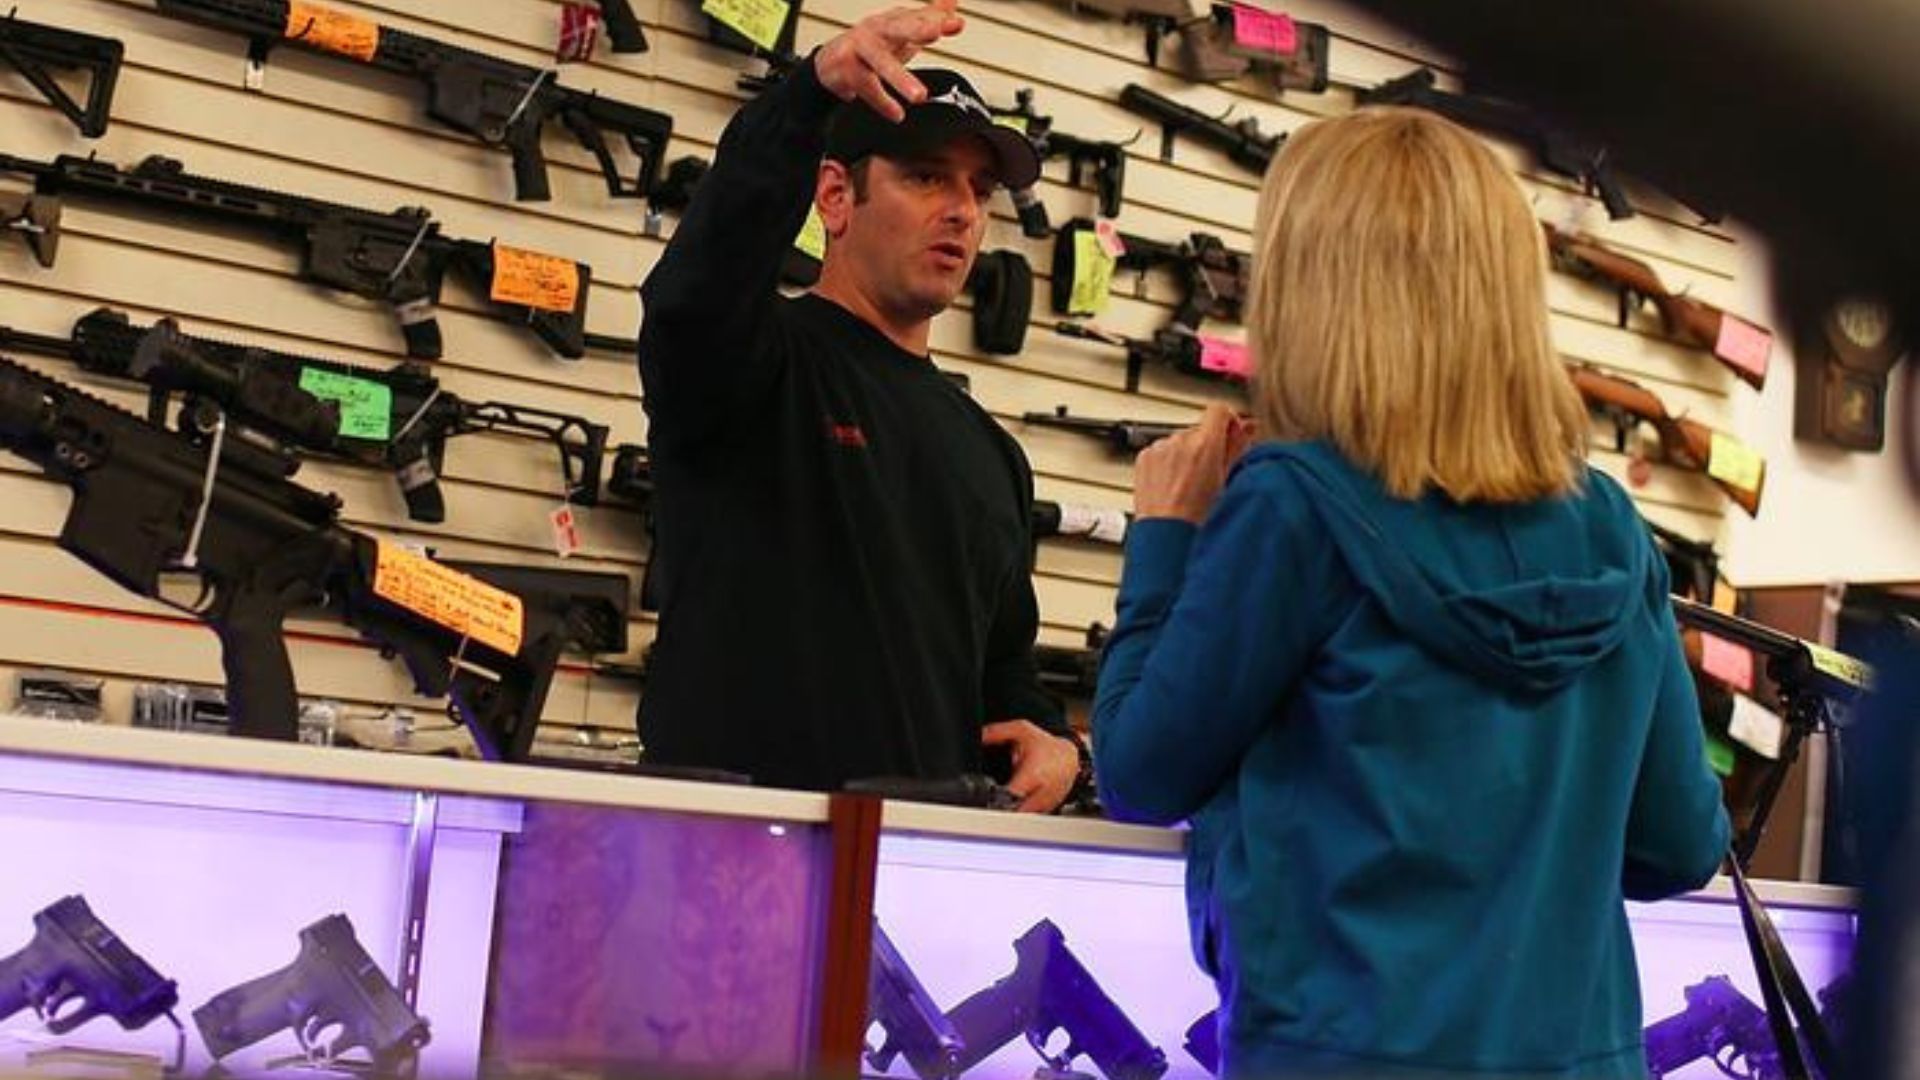 a lady purchasing a gun from a man